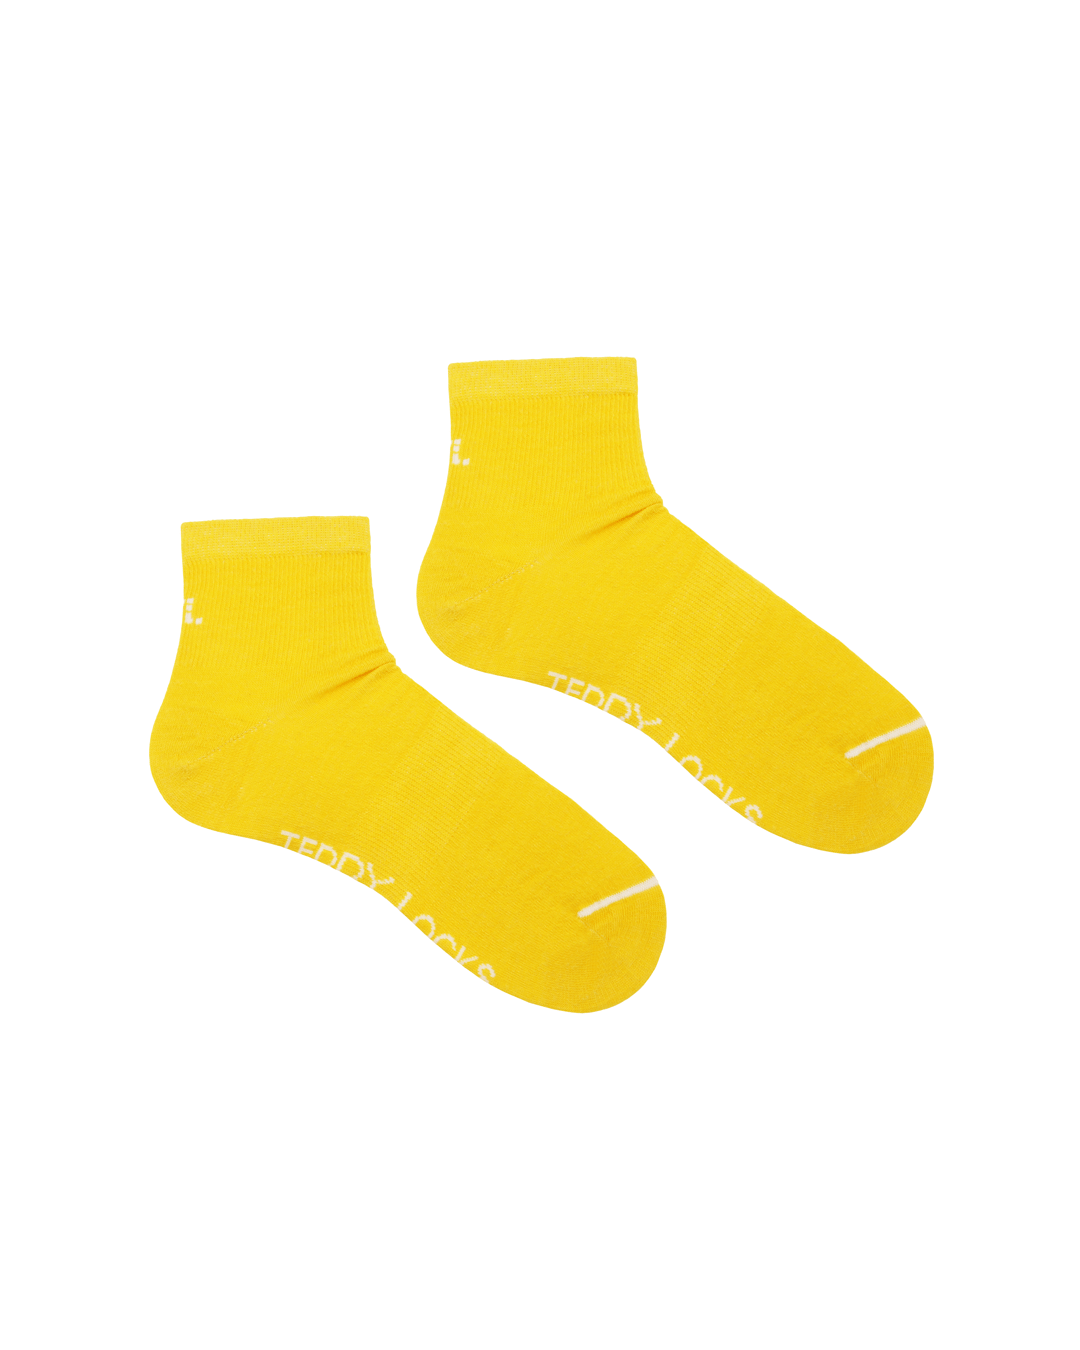 Sustainable Socks - Yellow Quarter Socks Made in the USA – Teddy Locks